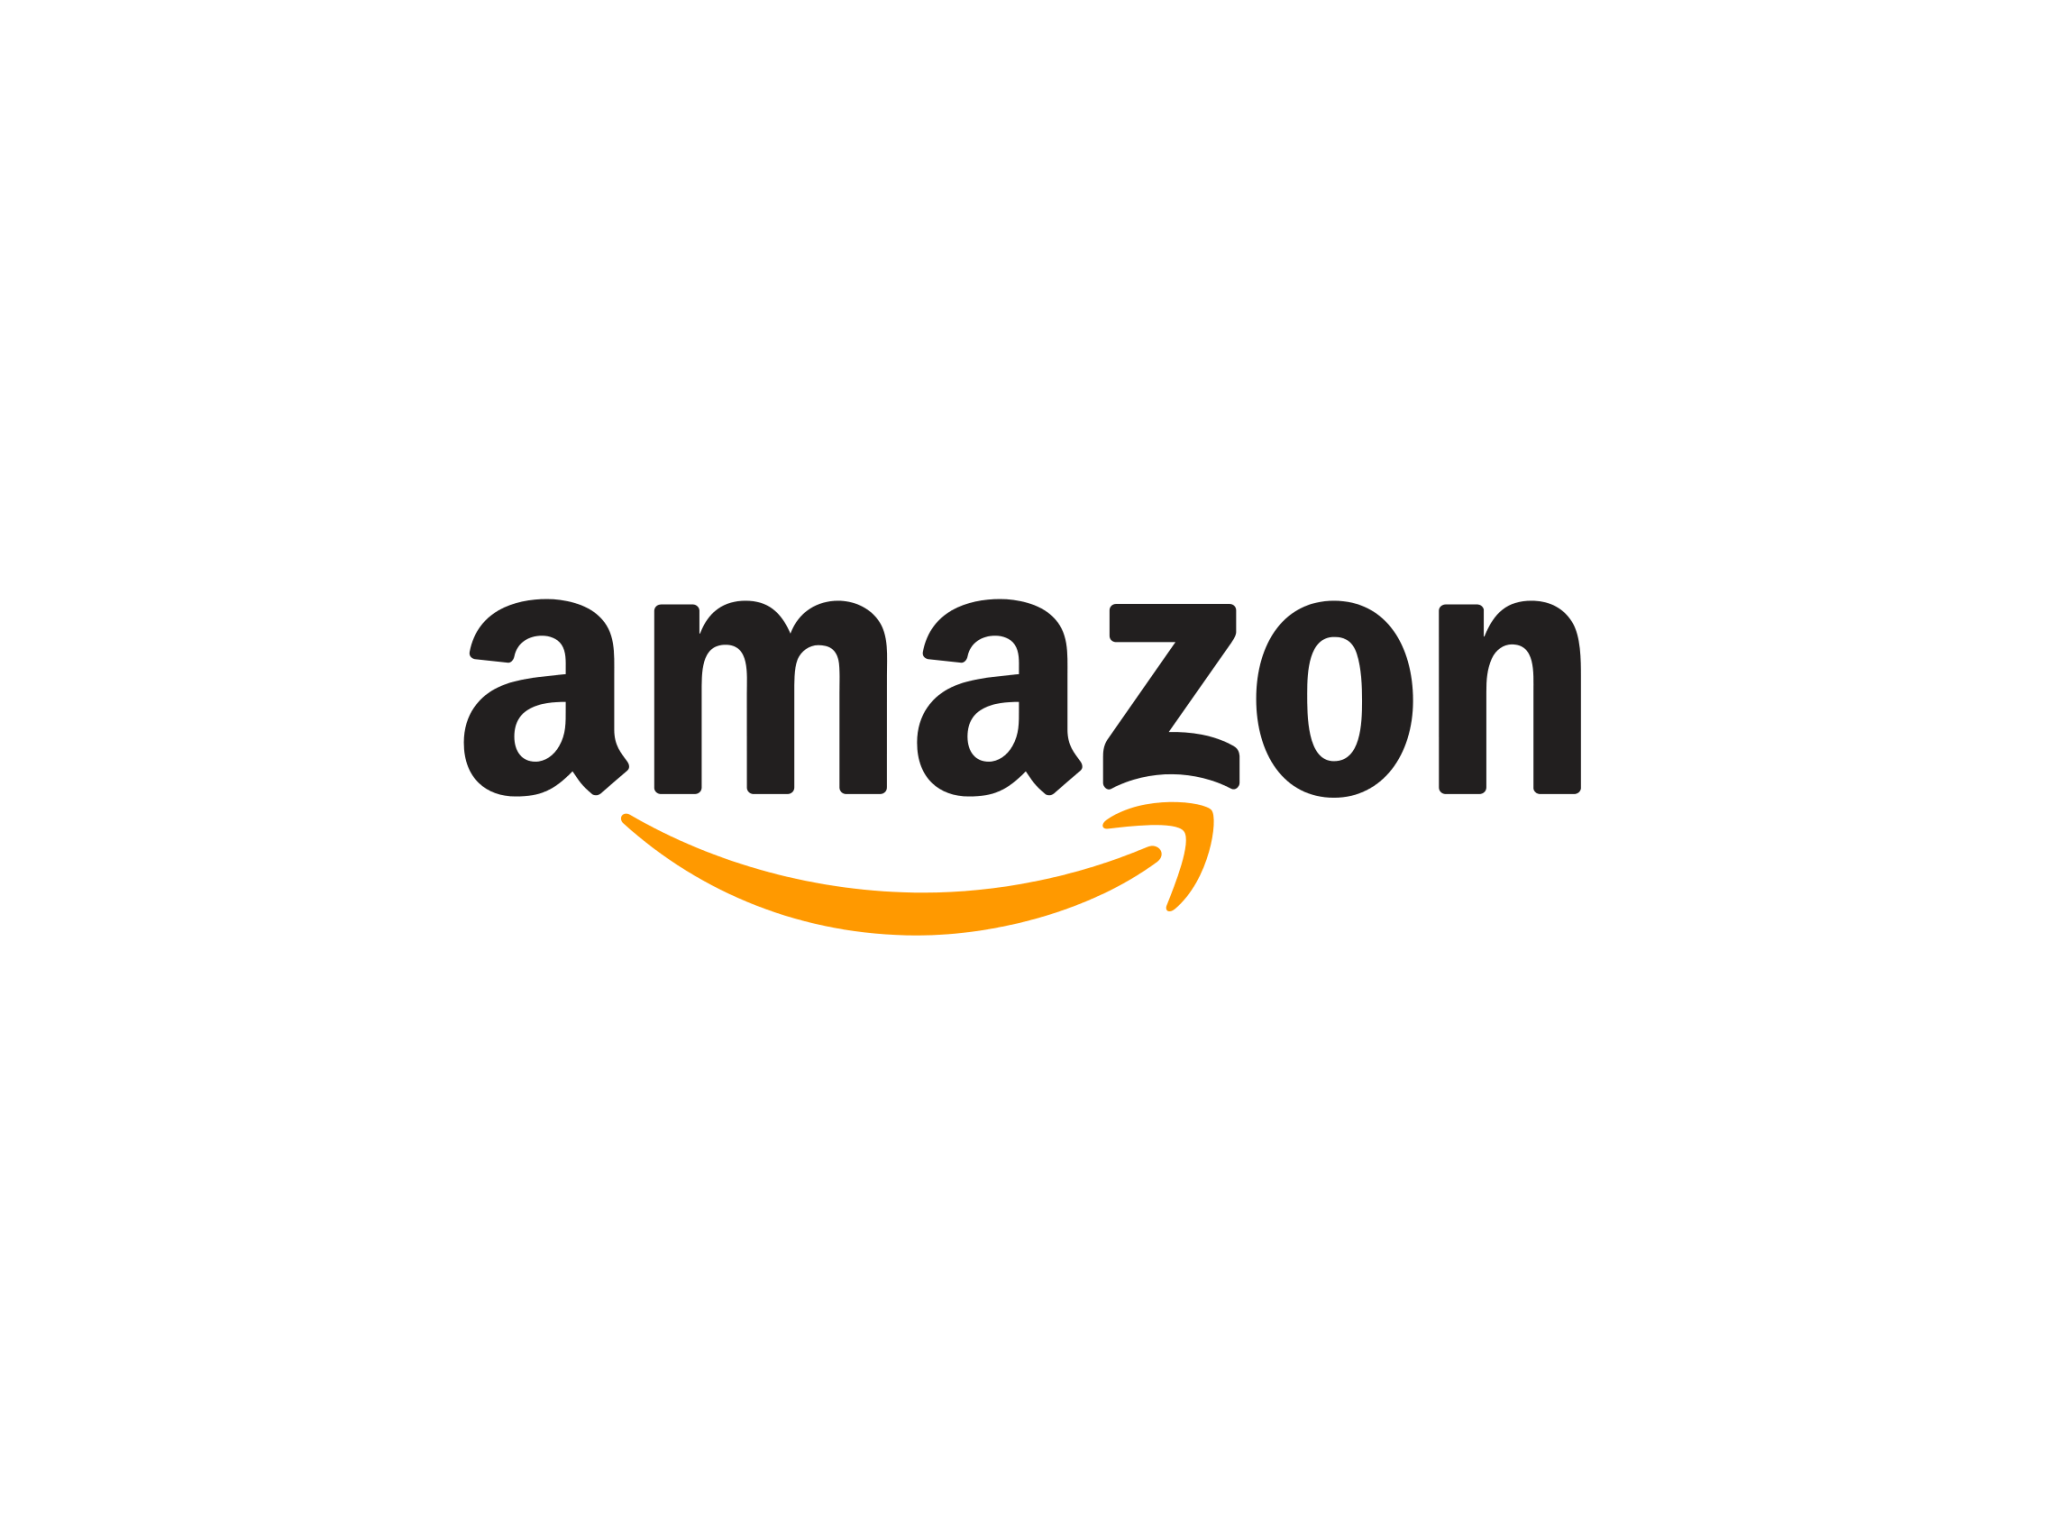 Amazong Logo - Amazon Logo PNG Image - PurePNG | Free transparent CC0 PNG Image Library